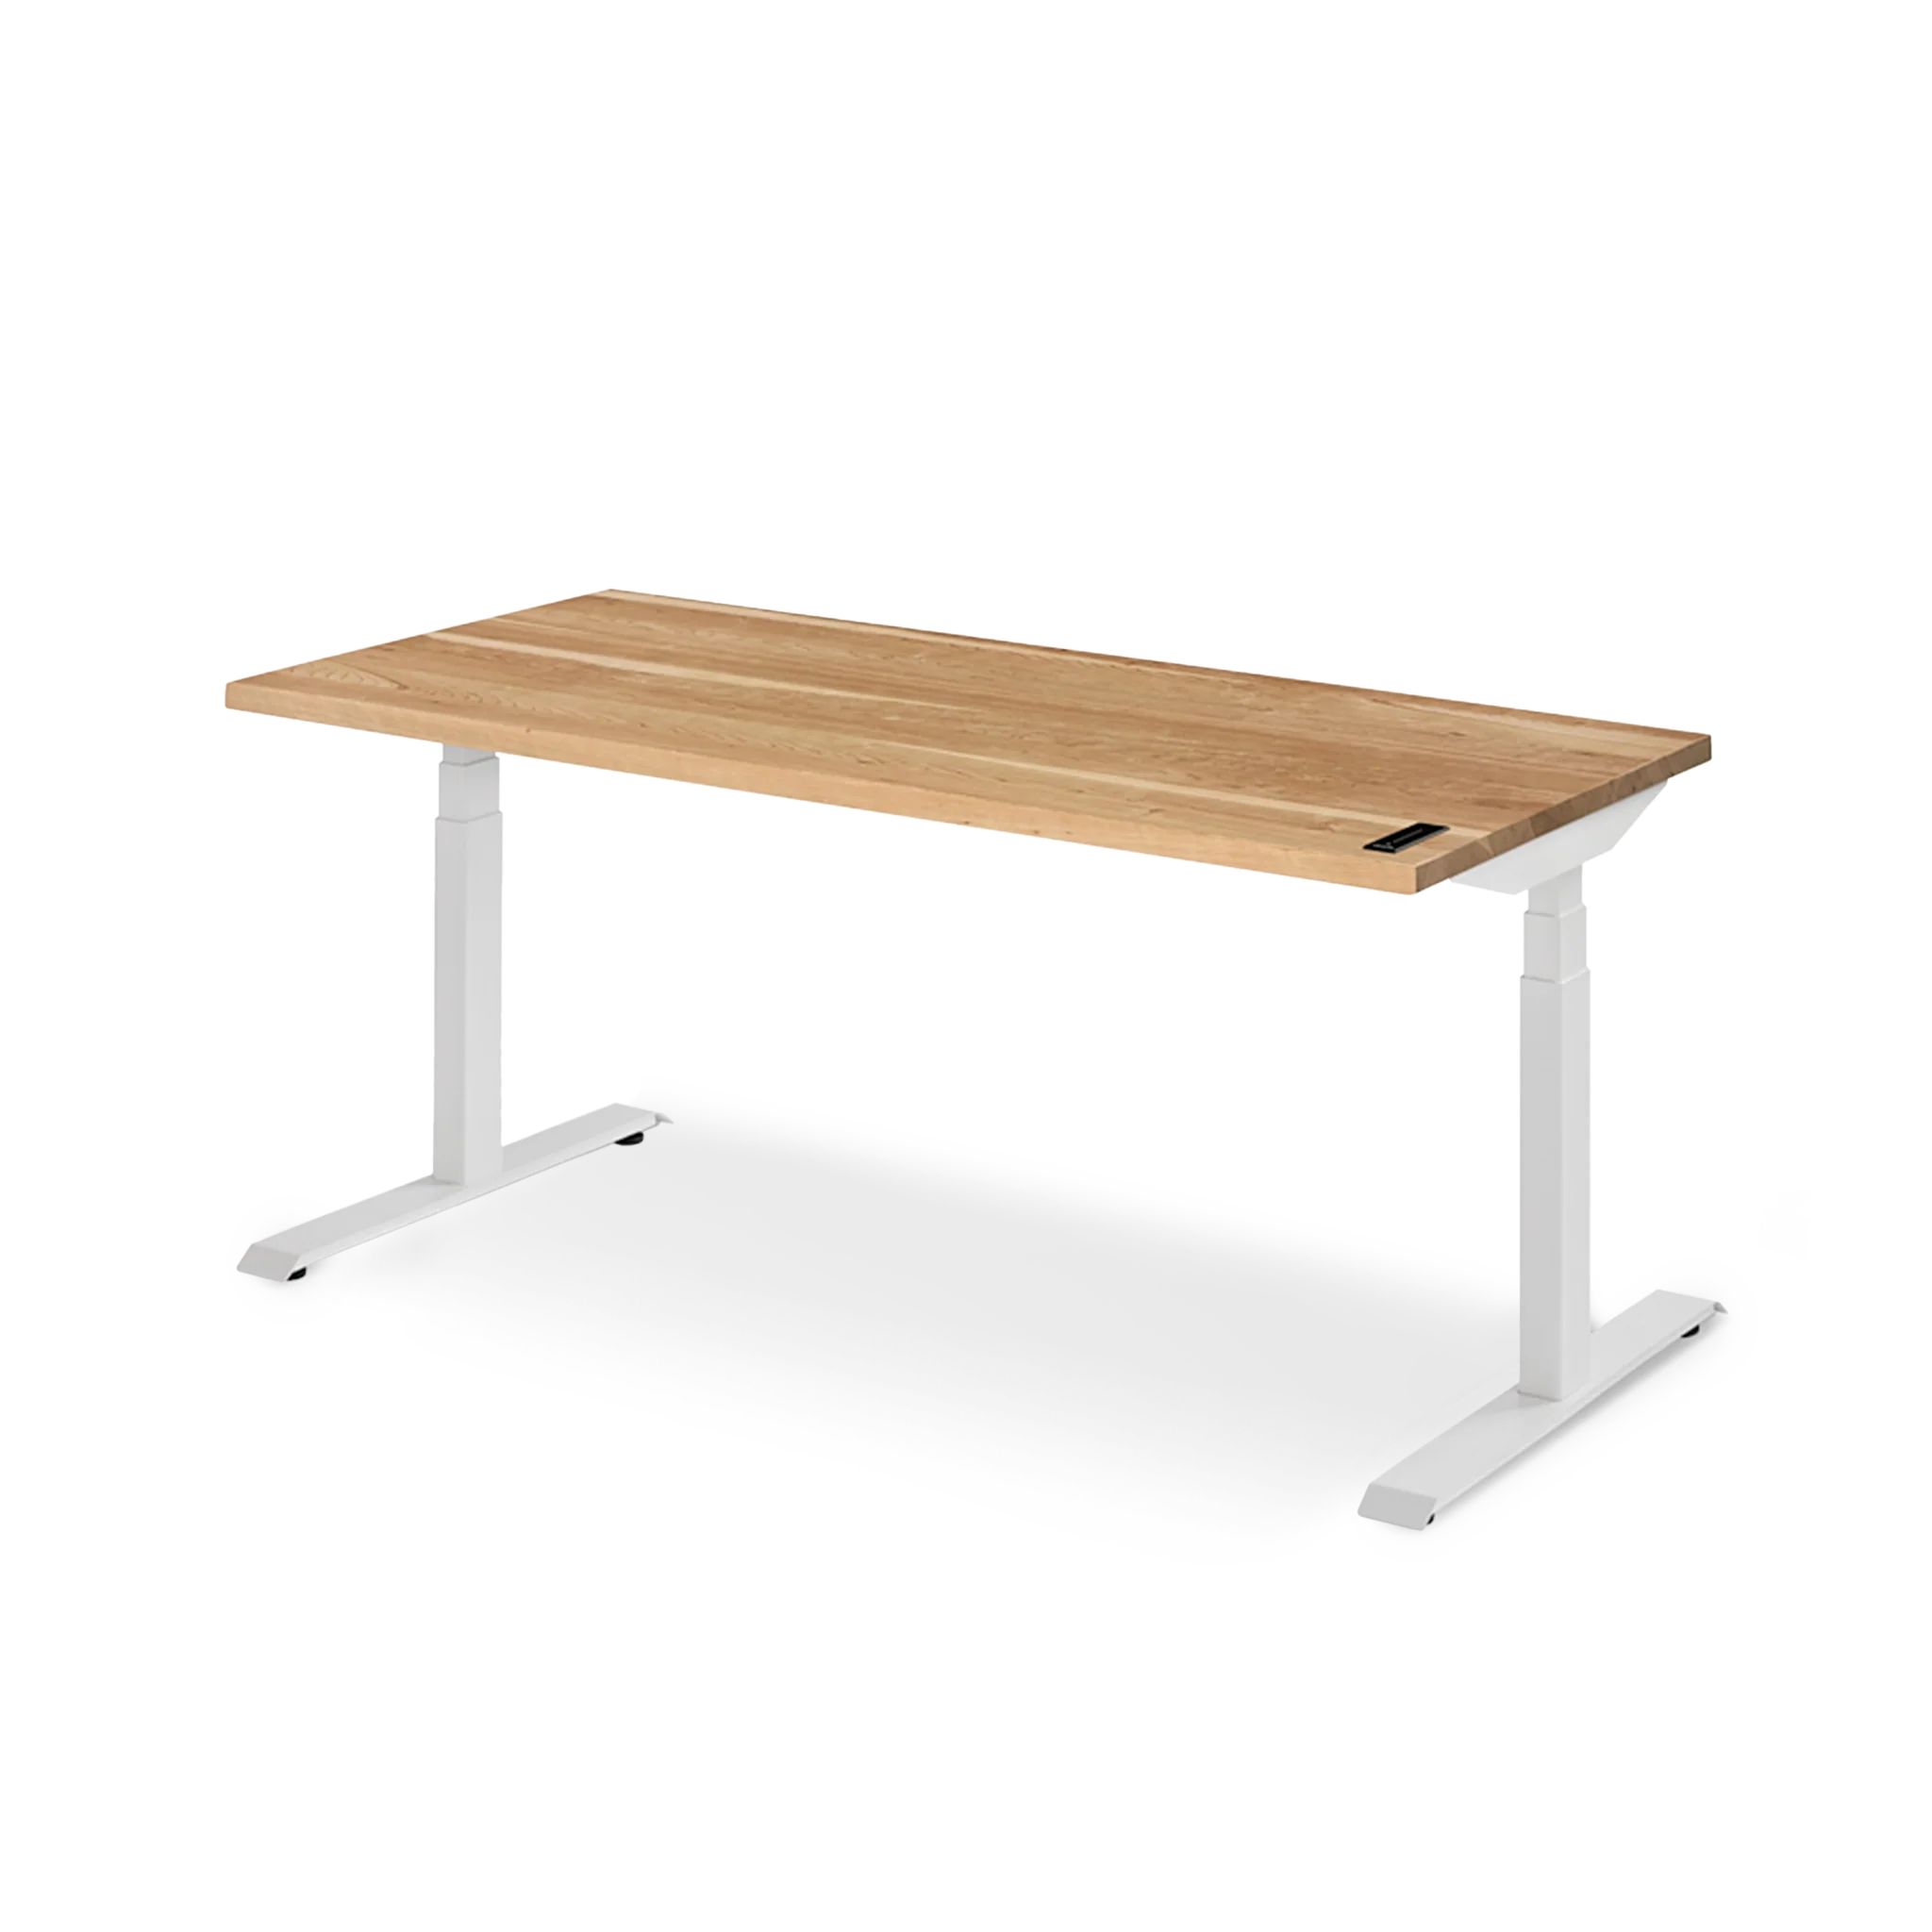 The Sway Standing Desk | ergonofis